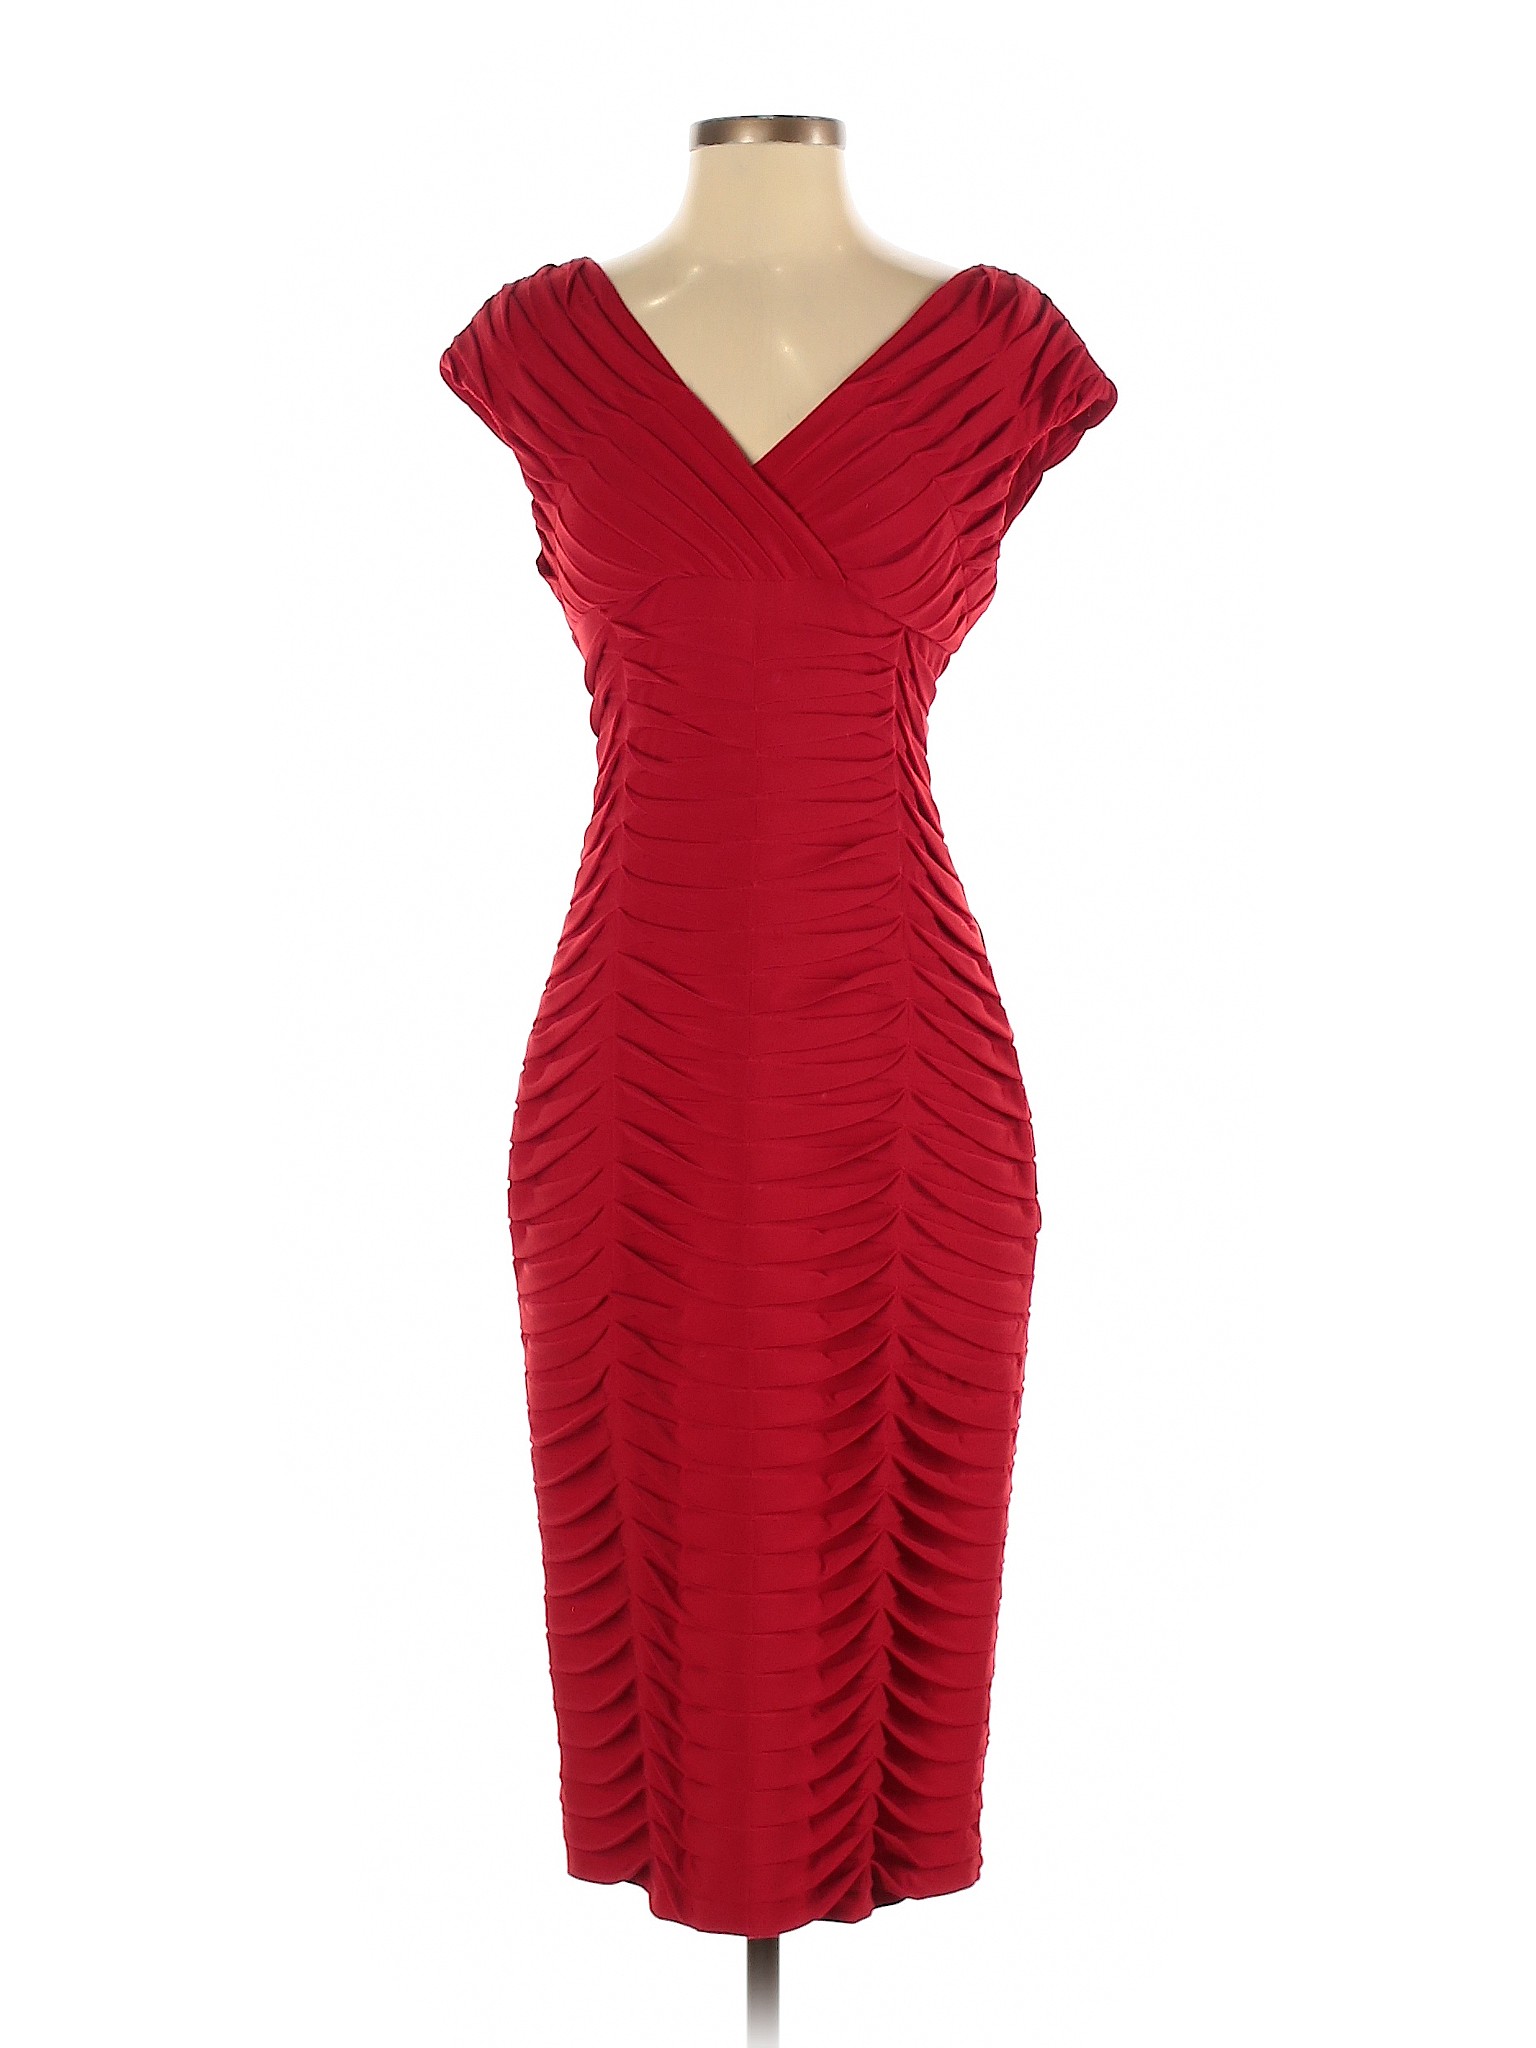 Adrianna Papell Women Red Cocktail Dress 4 | eBay